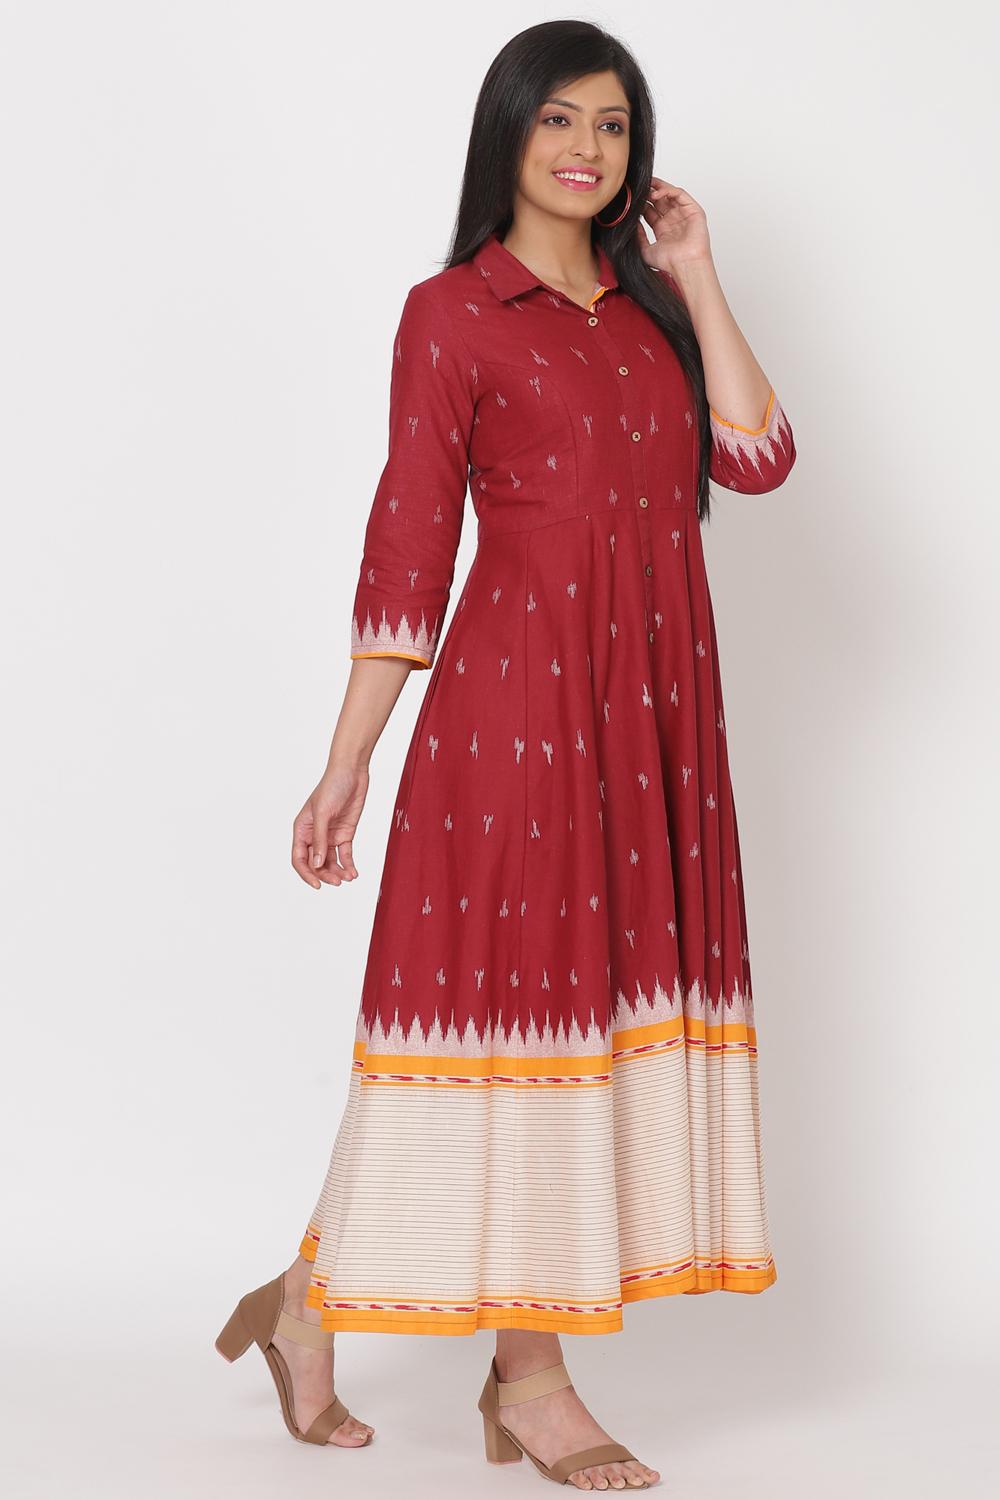 Buy Online Maroon Cotton Flex Dress for Women at Best Price at Rangriti ...